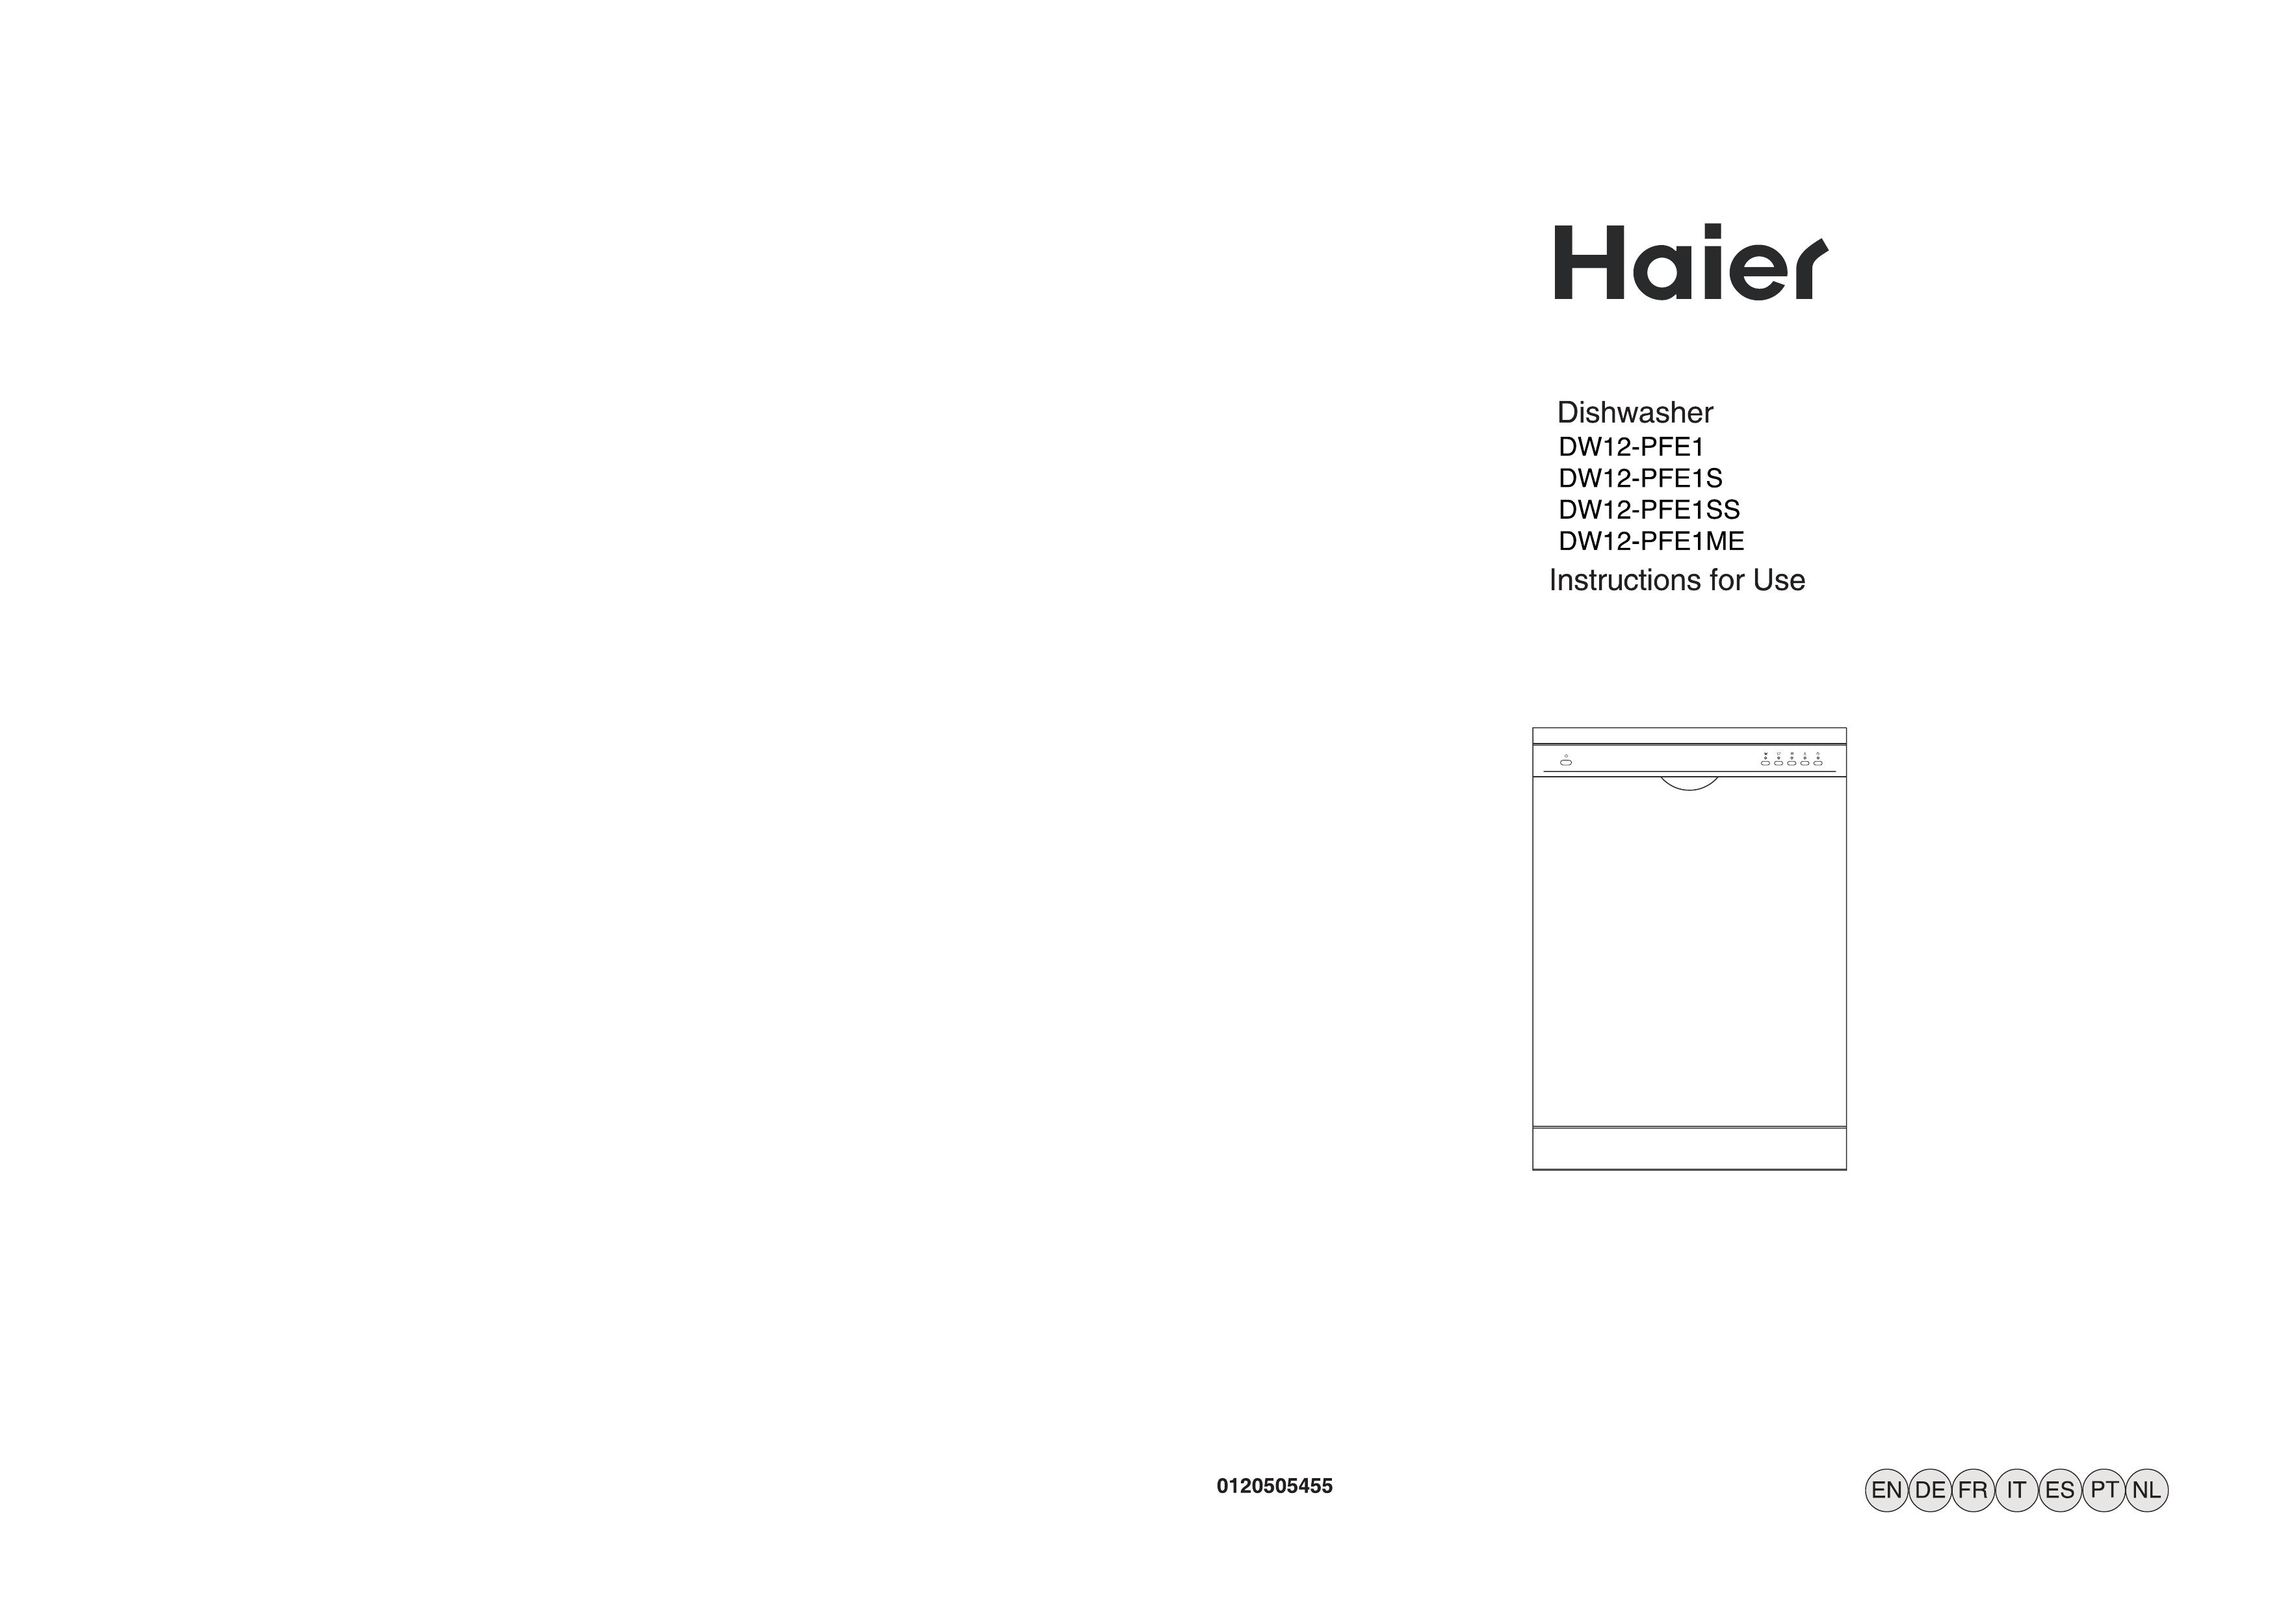 Haier DW12-PFE1SS Dishwasher User Manual